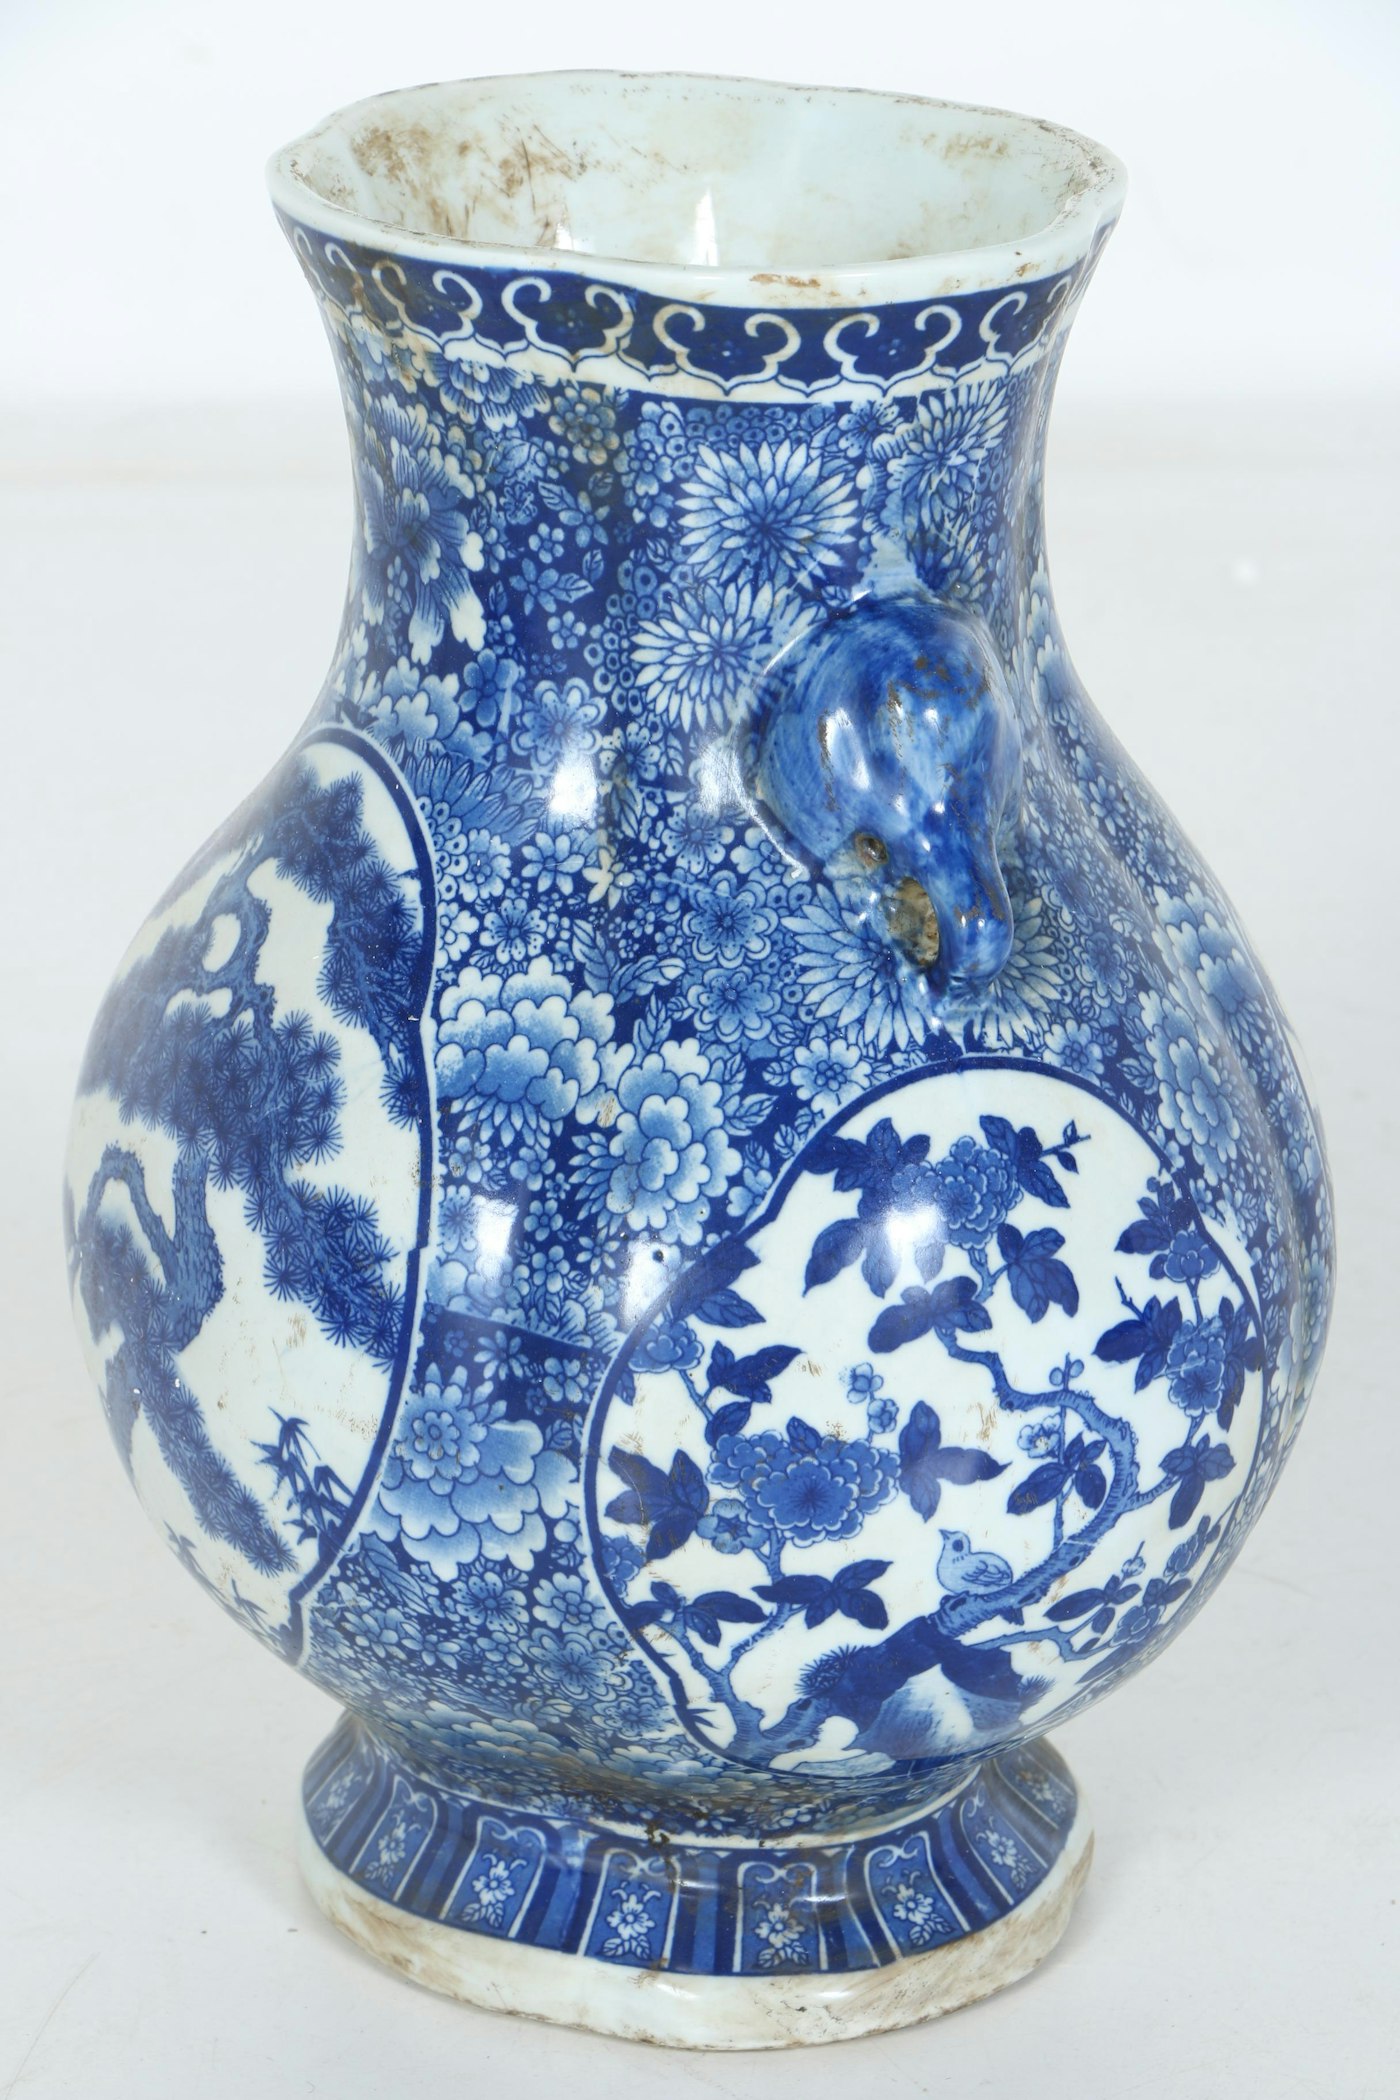 HIRADO BLUE AND WHITE RETICULATED PORCELAIN VASE Richard Gardner Antiques